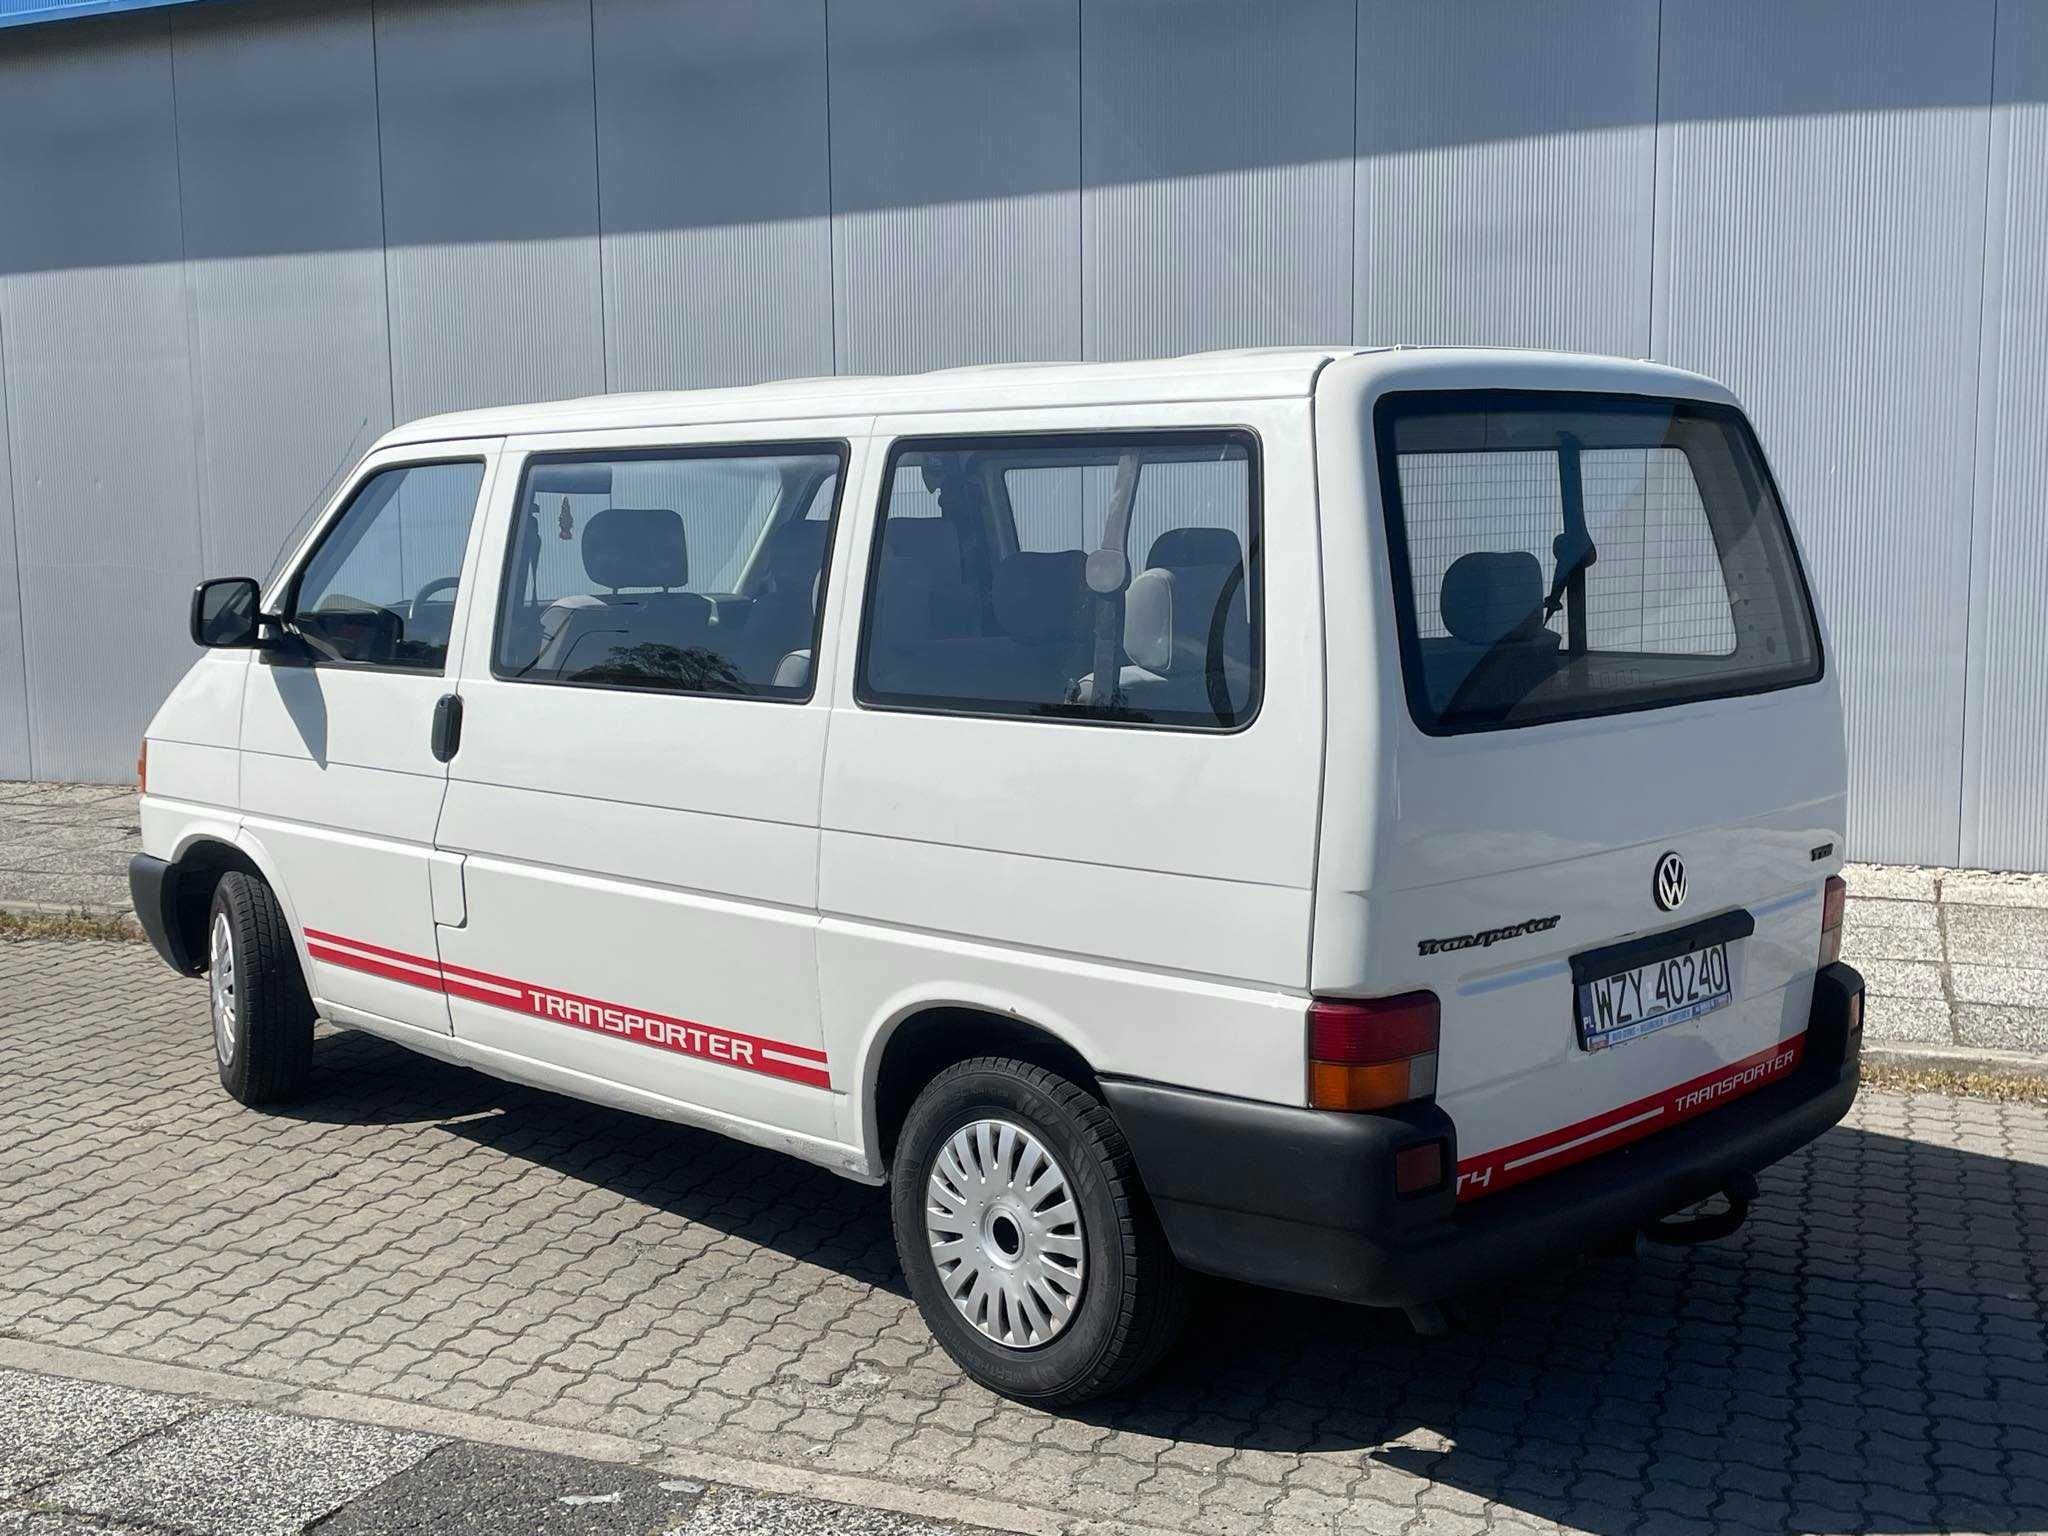 Volkswagen transporter t4/2.5tdi/9-osobowy/hak/bez wkladu/zapraszam!